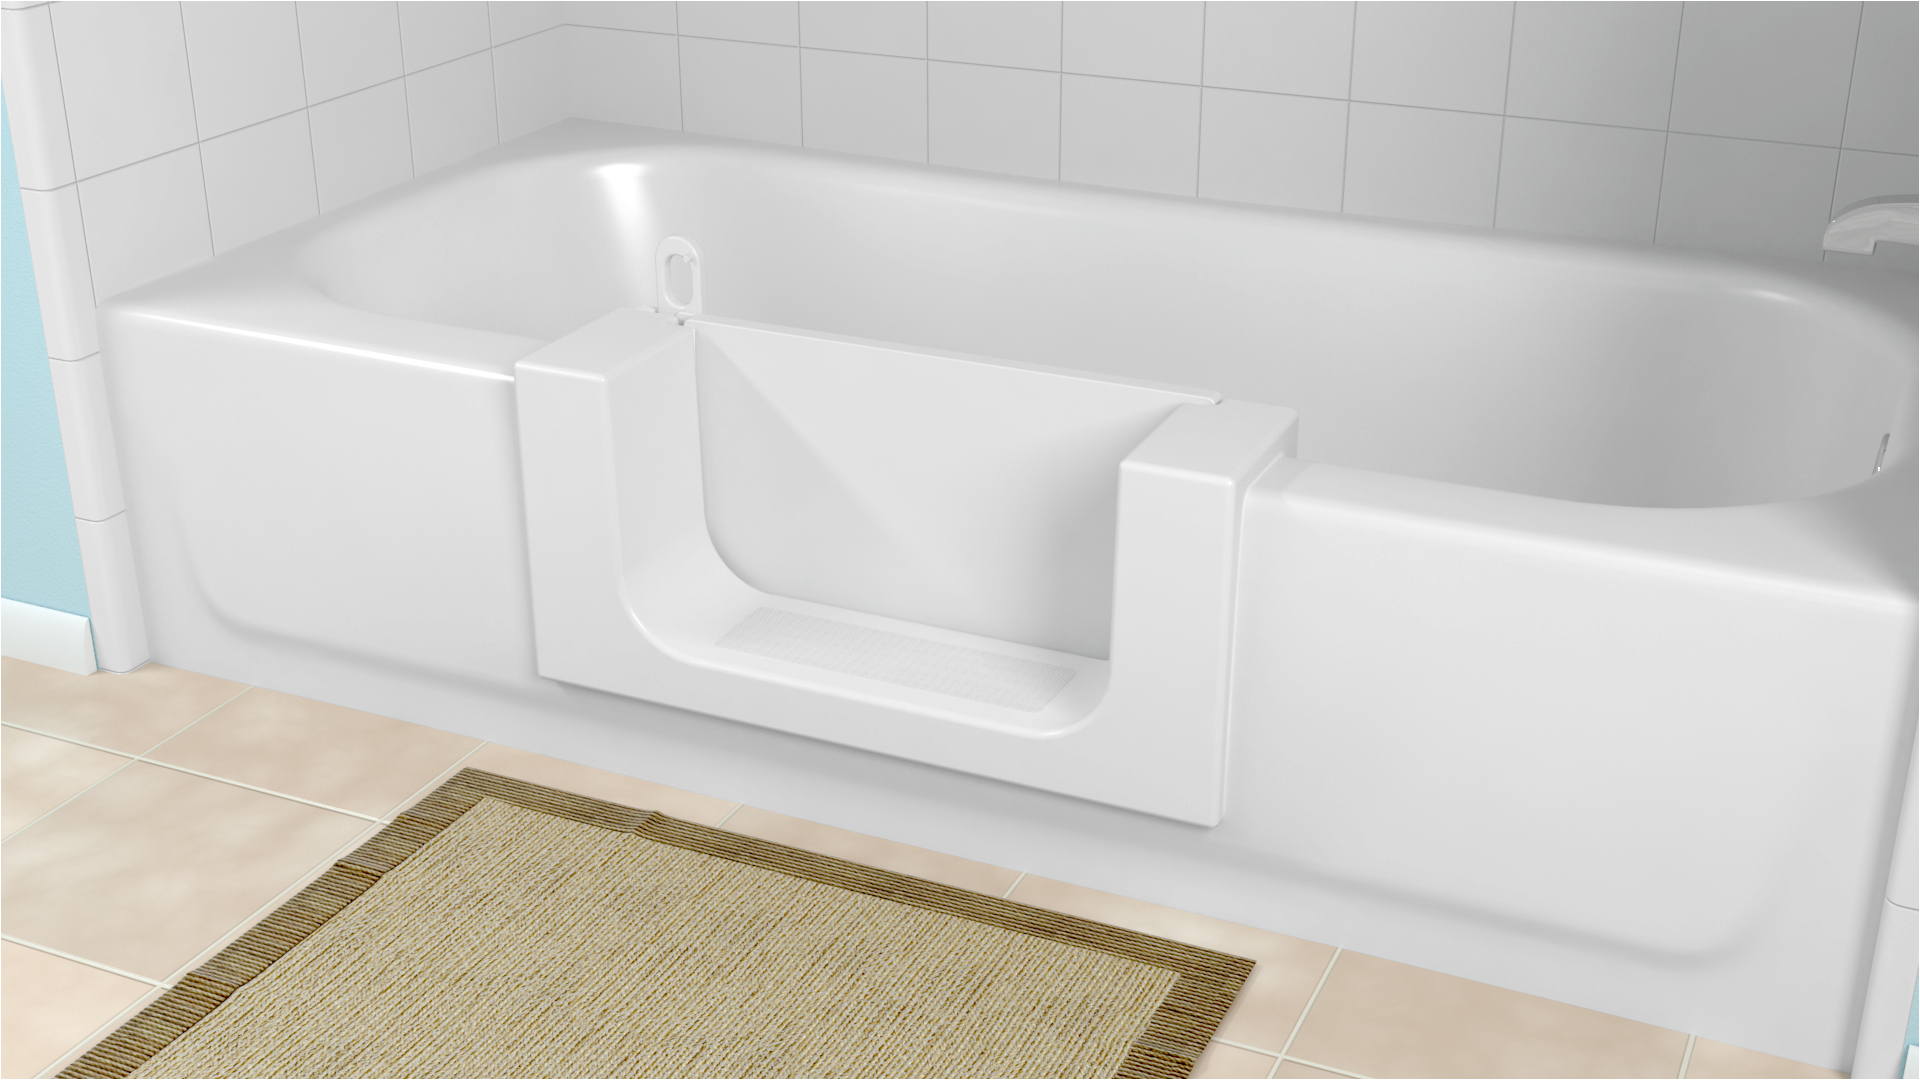 Bathtubs for Handicapped Easy Access Bathtubs Showers • Bathtub Ideas